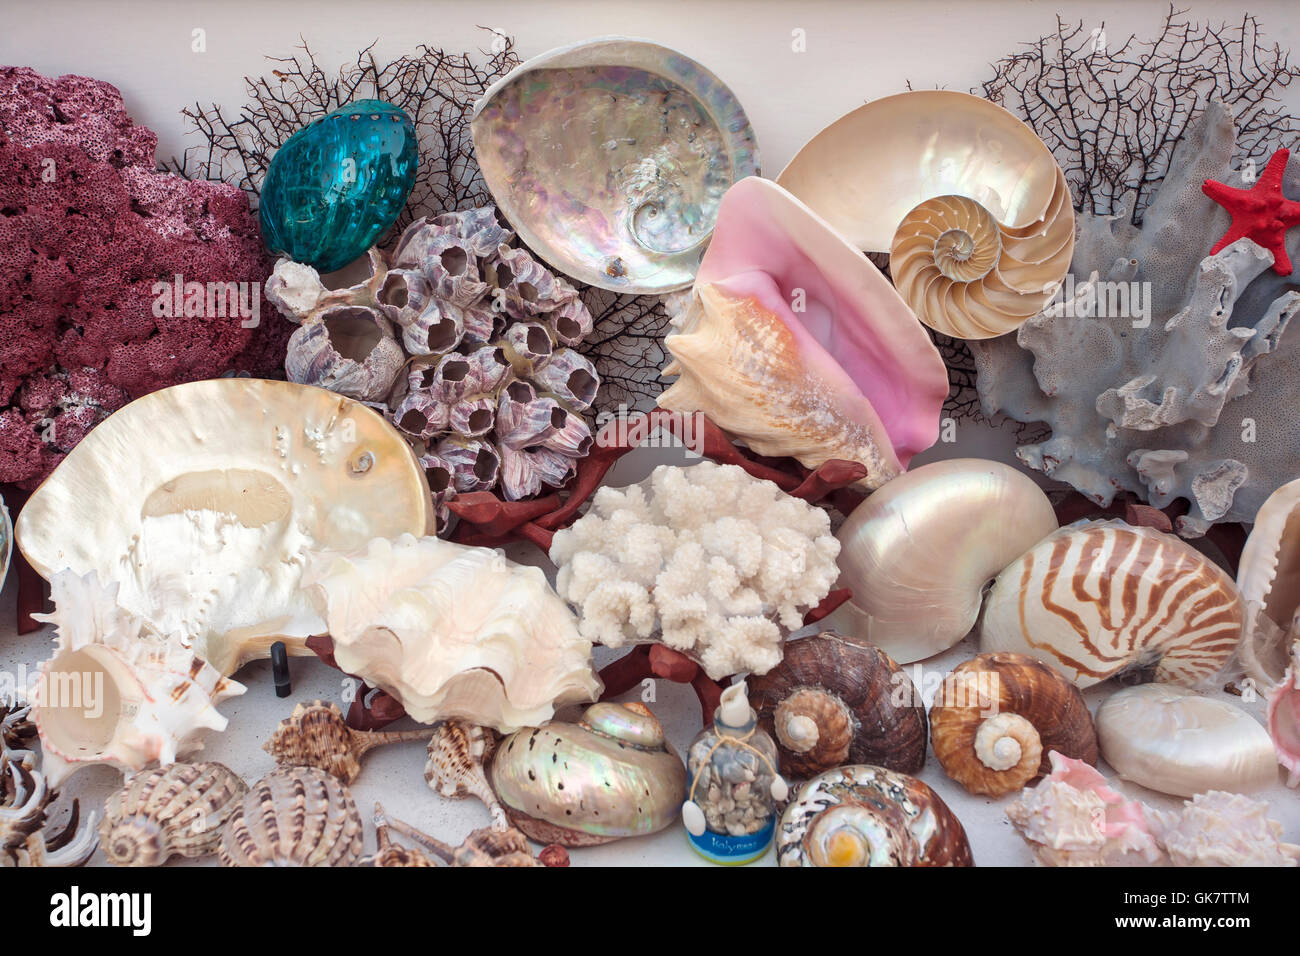 Conchas para decoracion fotografías e imágenes de alta resolución - Alamy